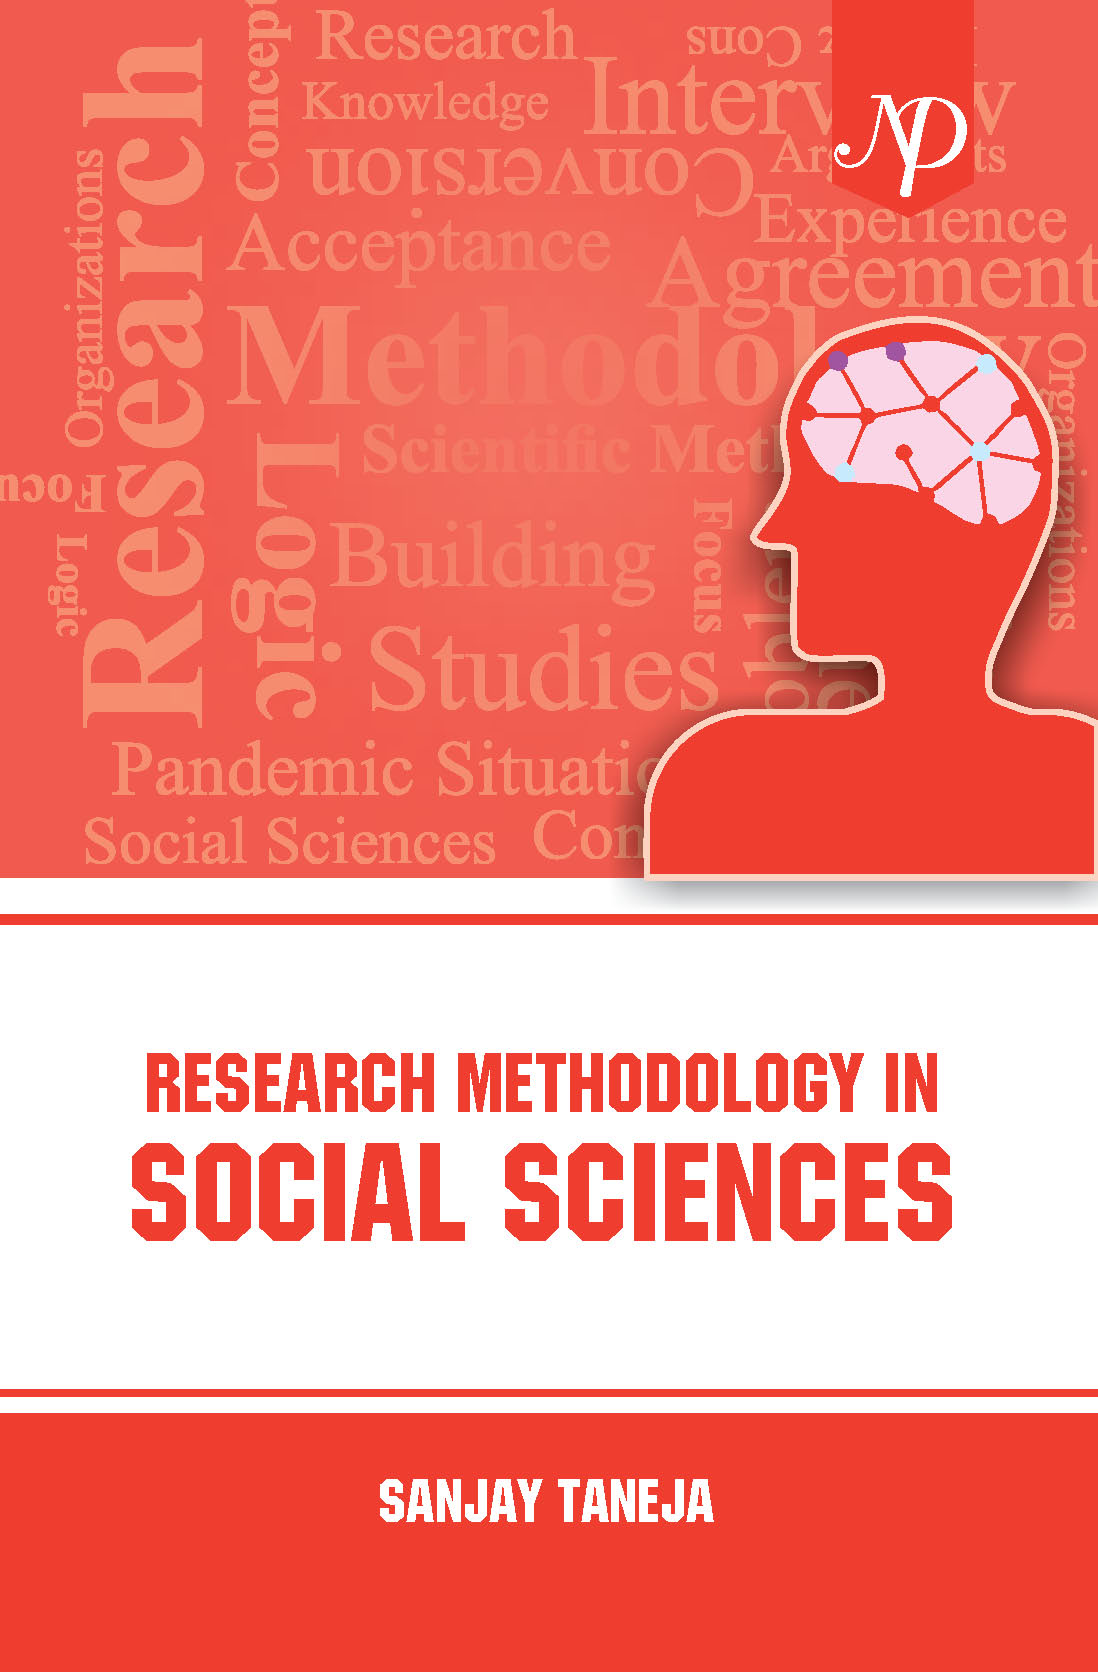 Research Methodology in Social Sciences By Sanjay Taneja Cover.jpg